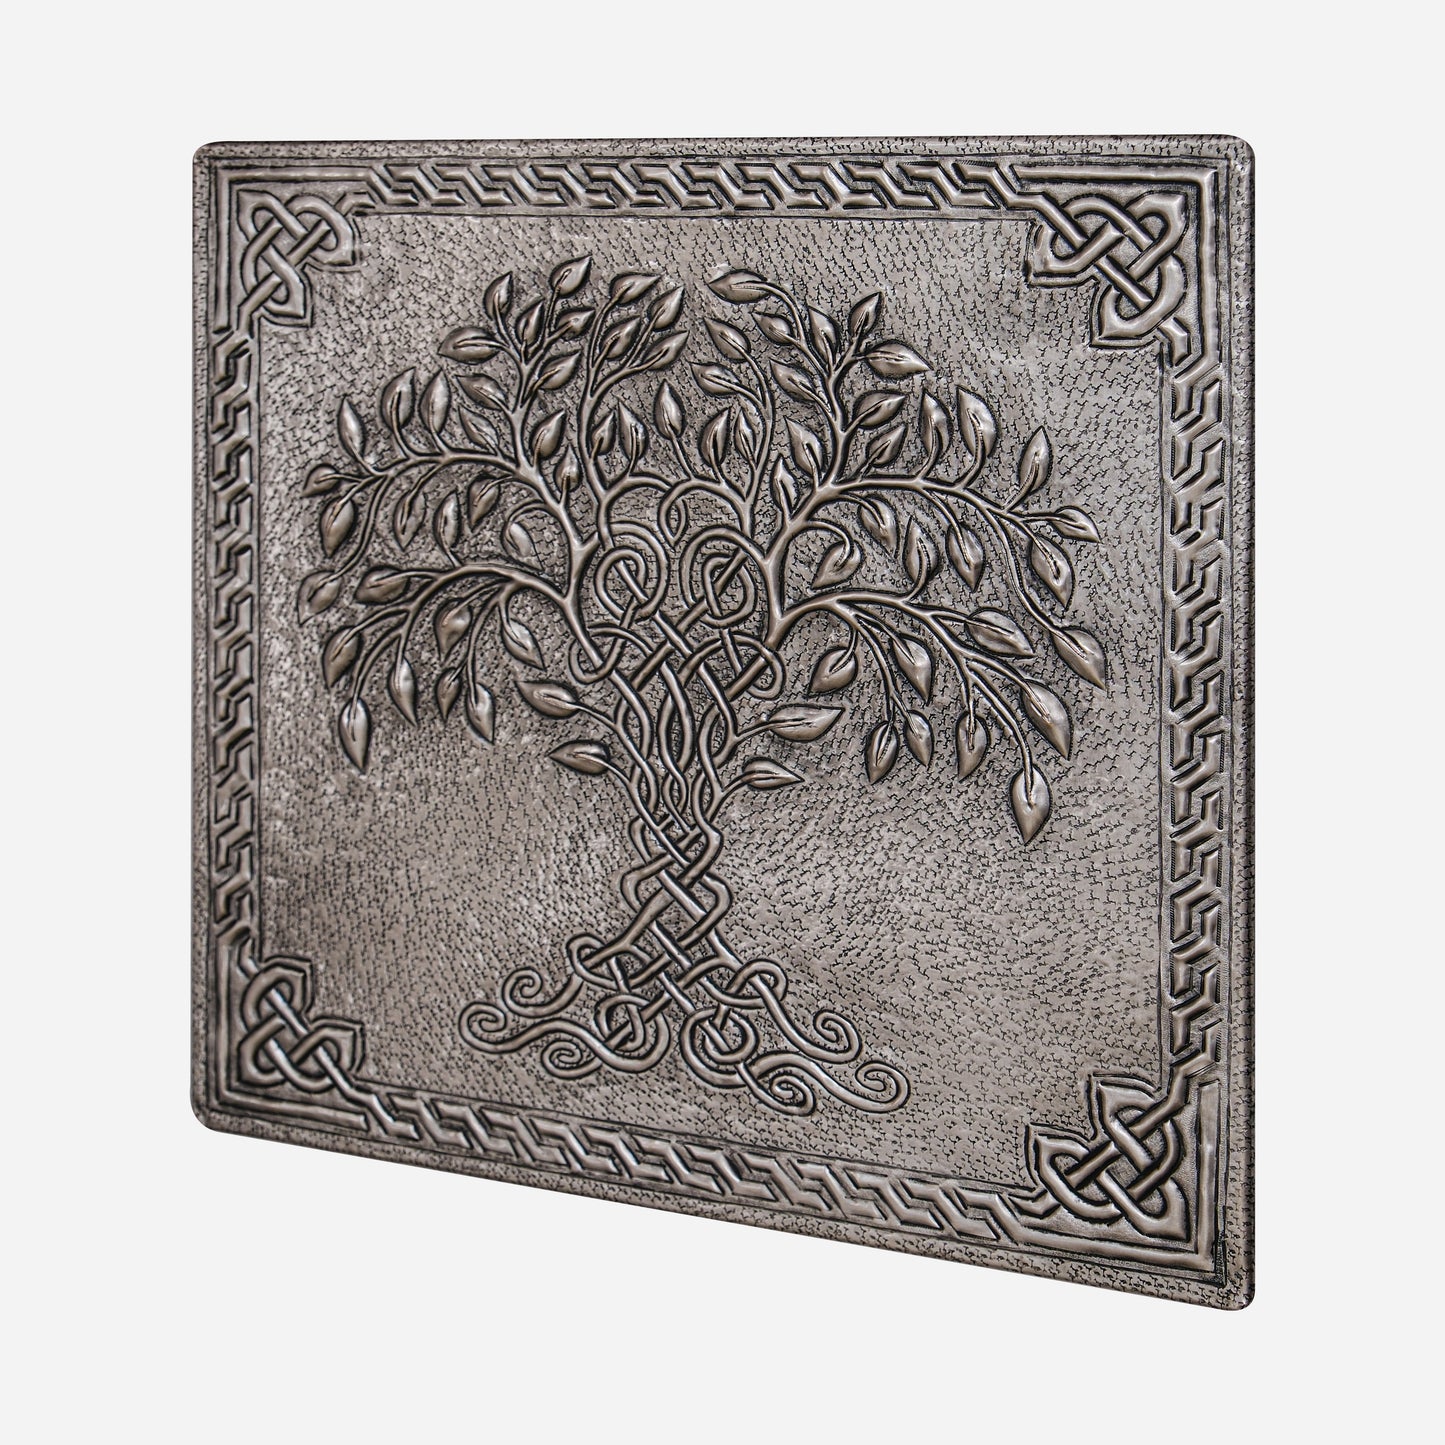 Copper Backsplash (Tree of Life with Celtic Border, Silver Color)